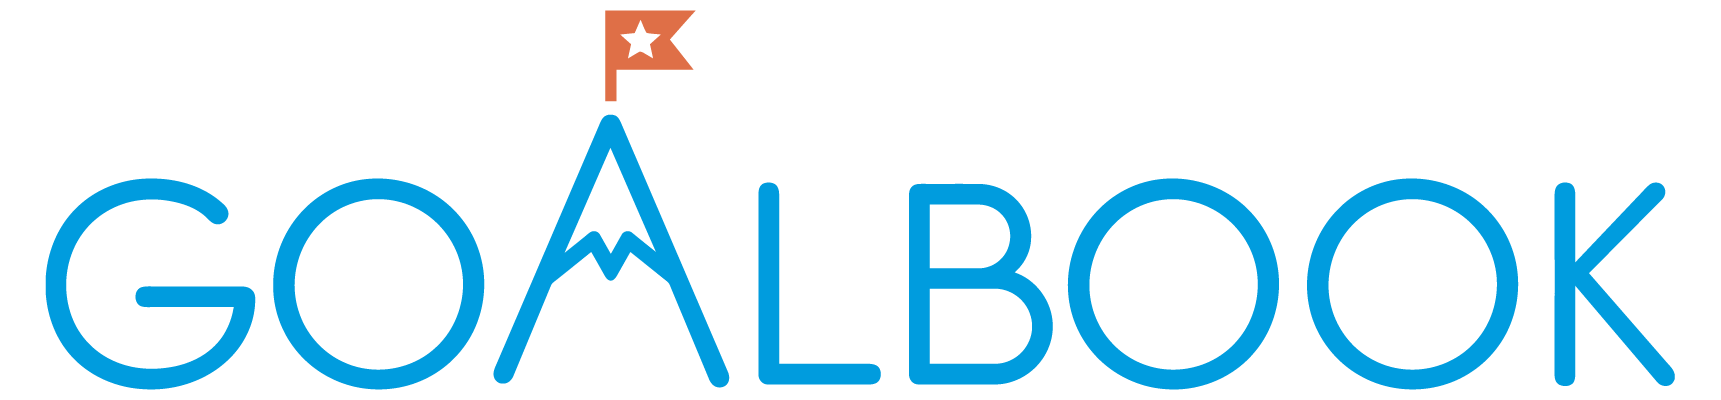 Goalbook company logo